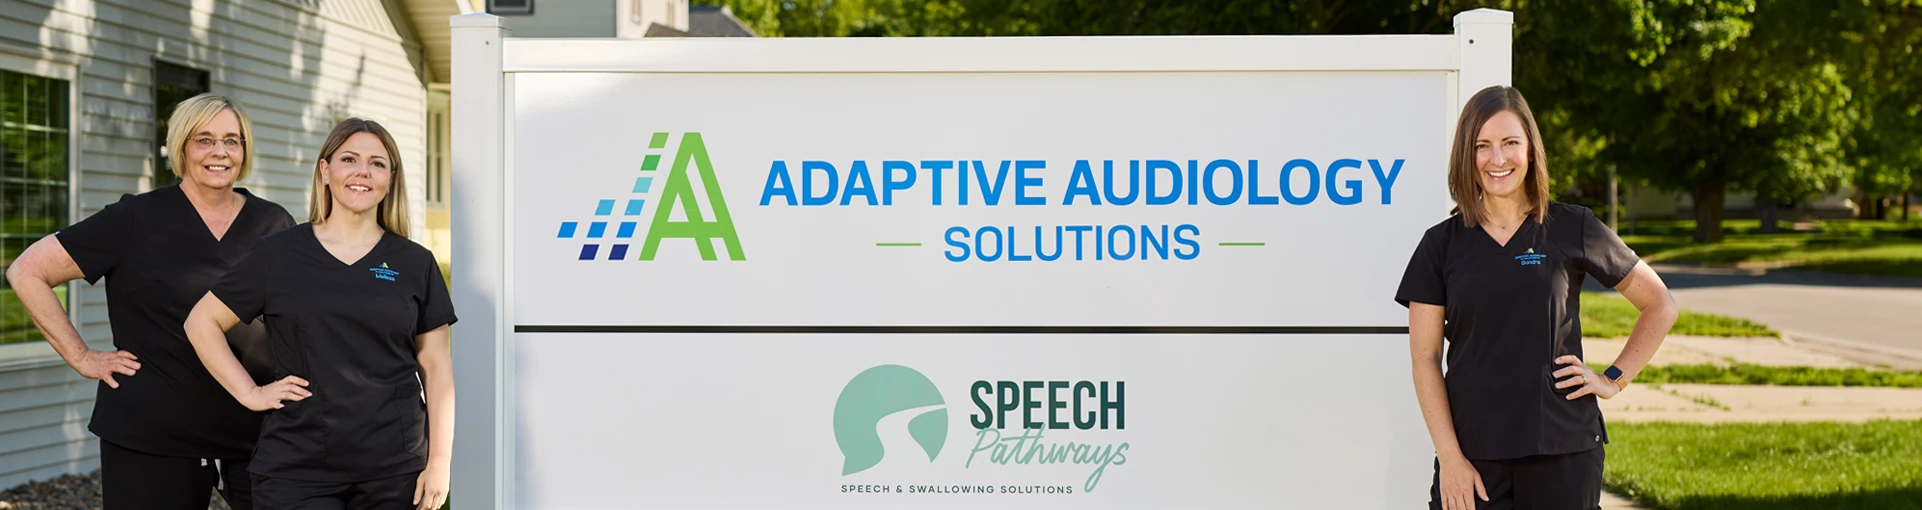 adaptive audiology team outside building